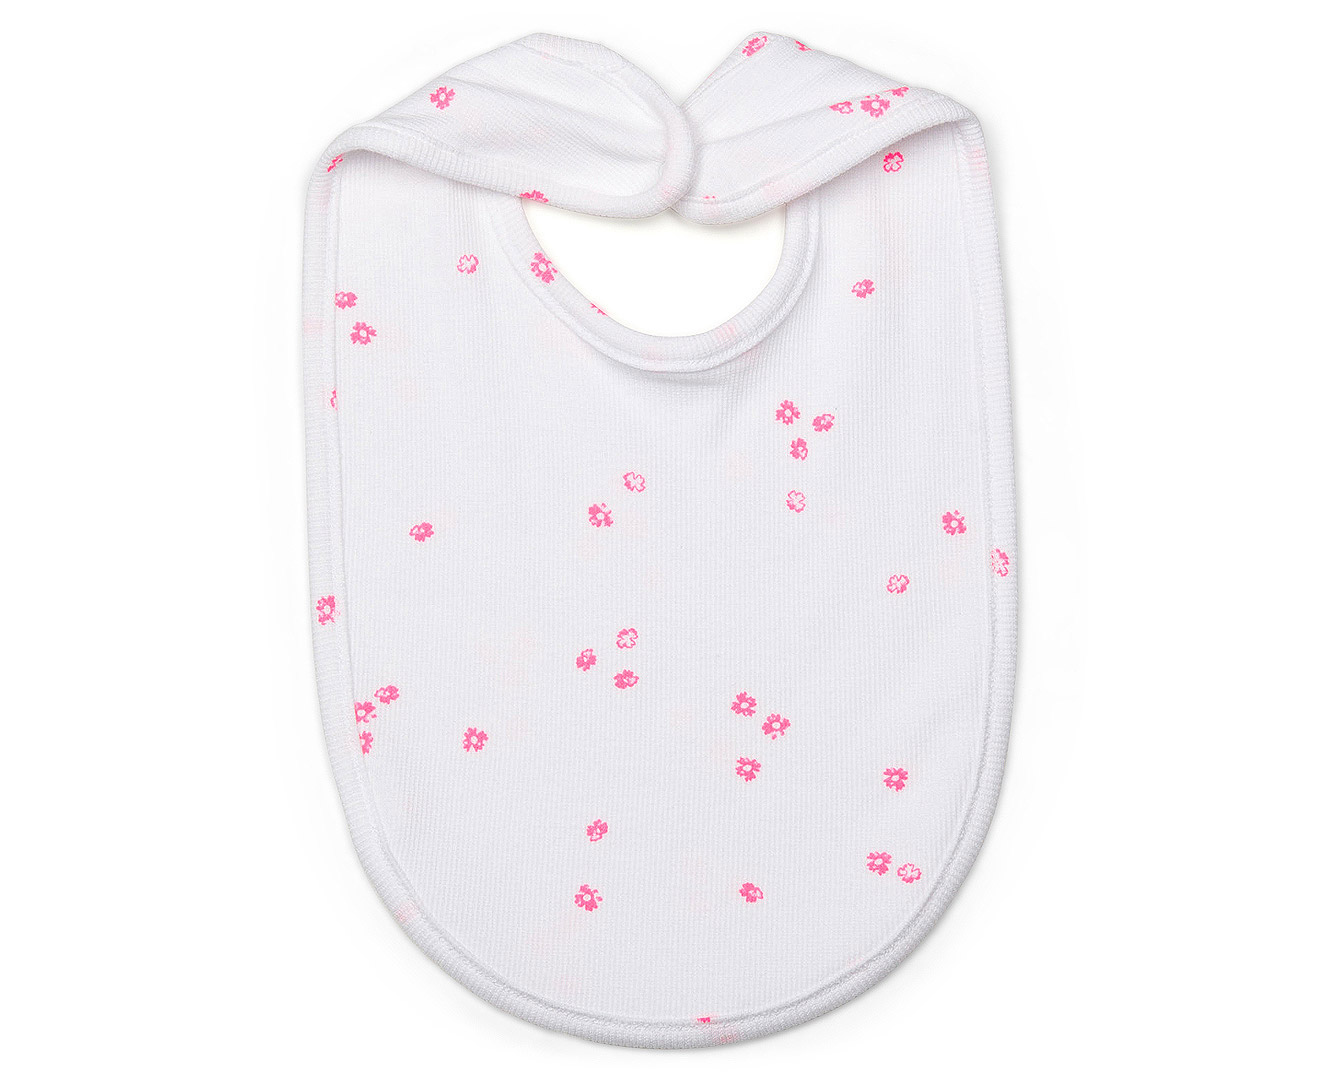 Bonds Baby Ribbies Bib - White Scattered Floral Print | Catch.com.au